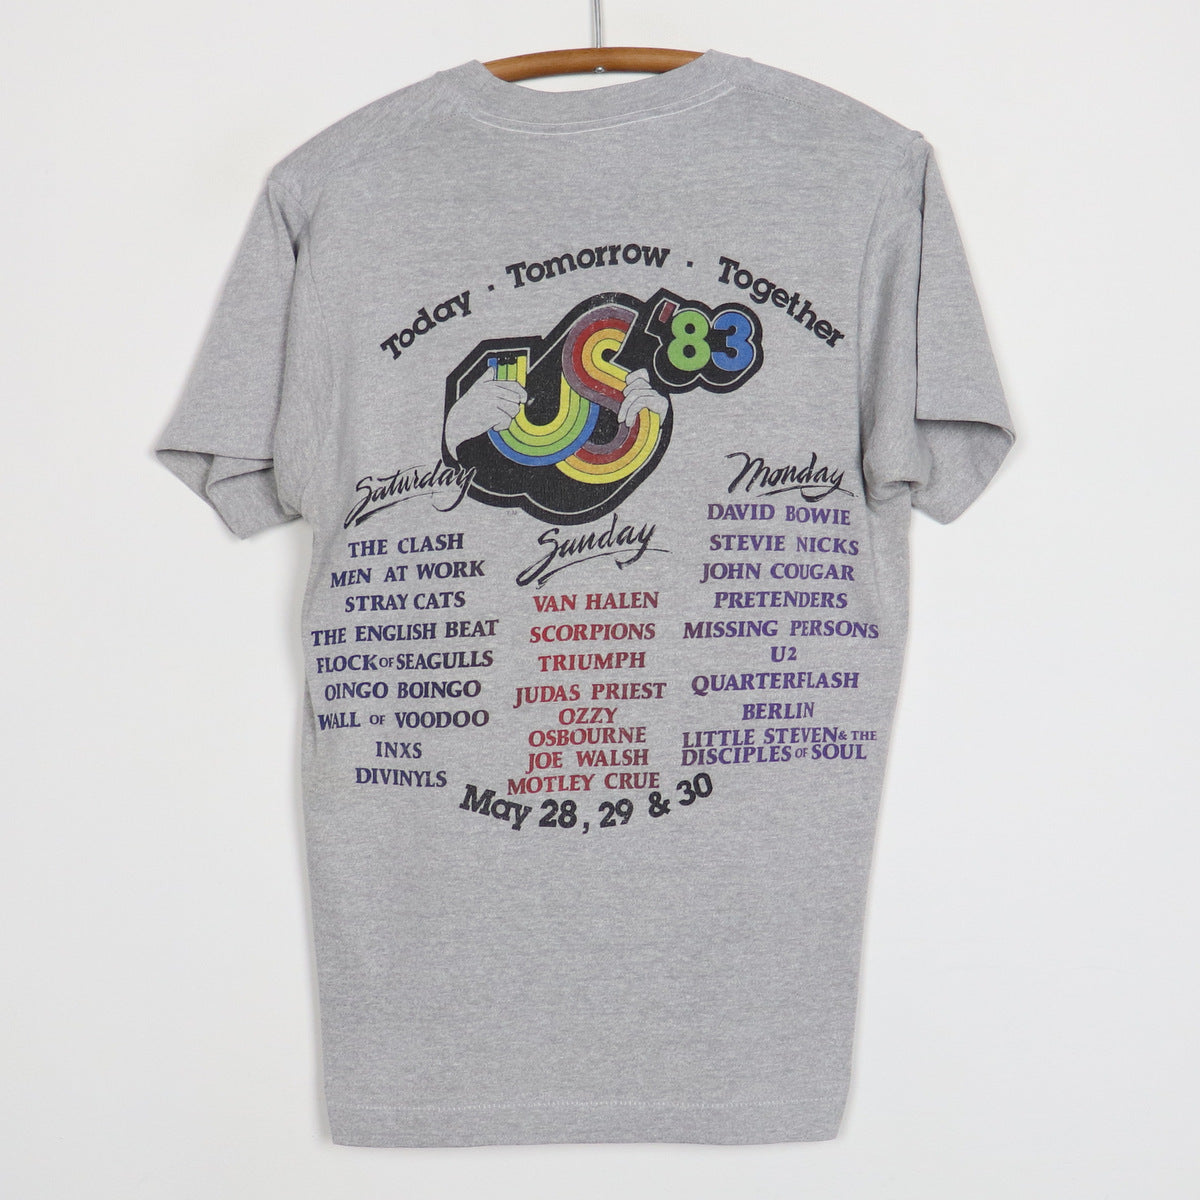 1983 Us Festival Concert Shirt